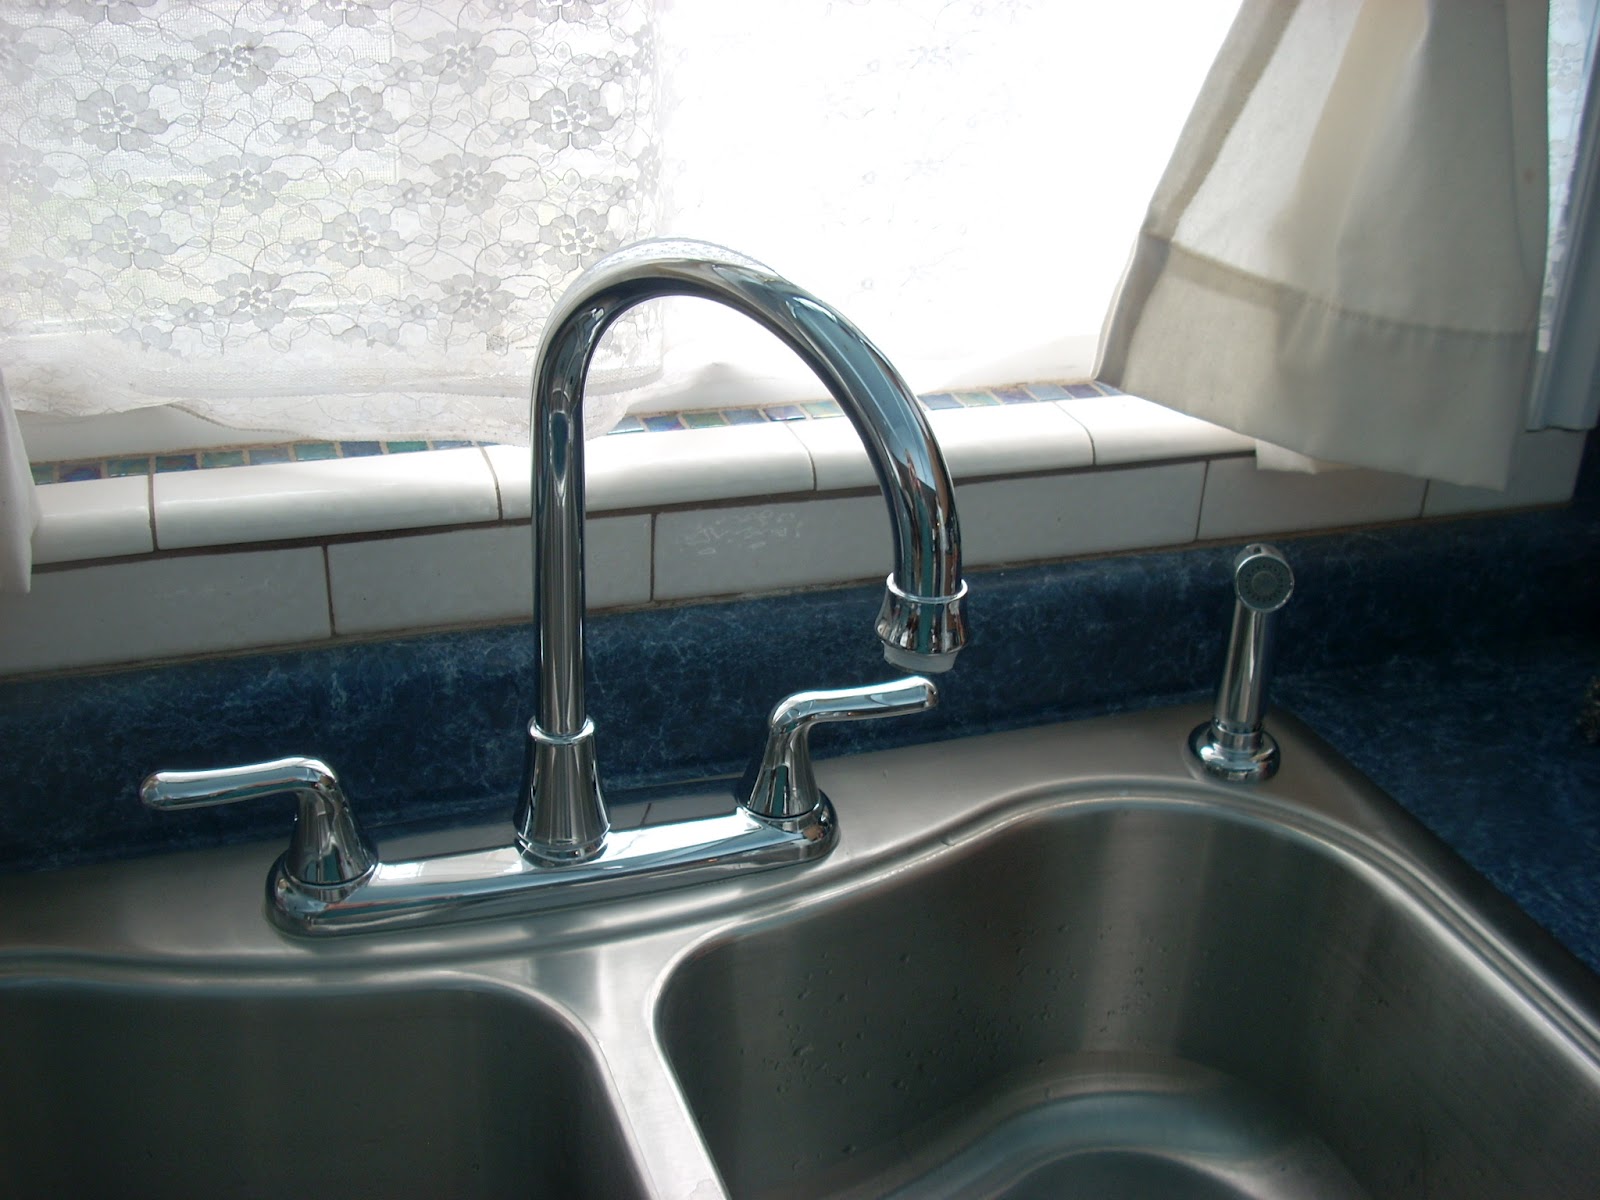 diy kitchen sink faucet replacement